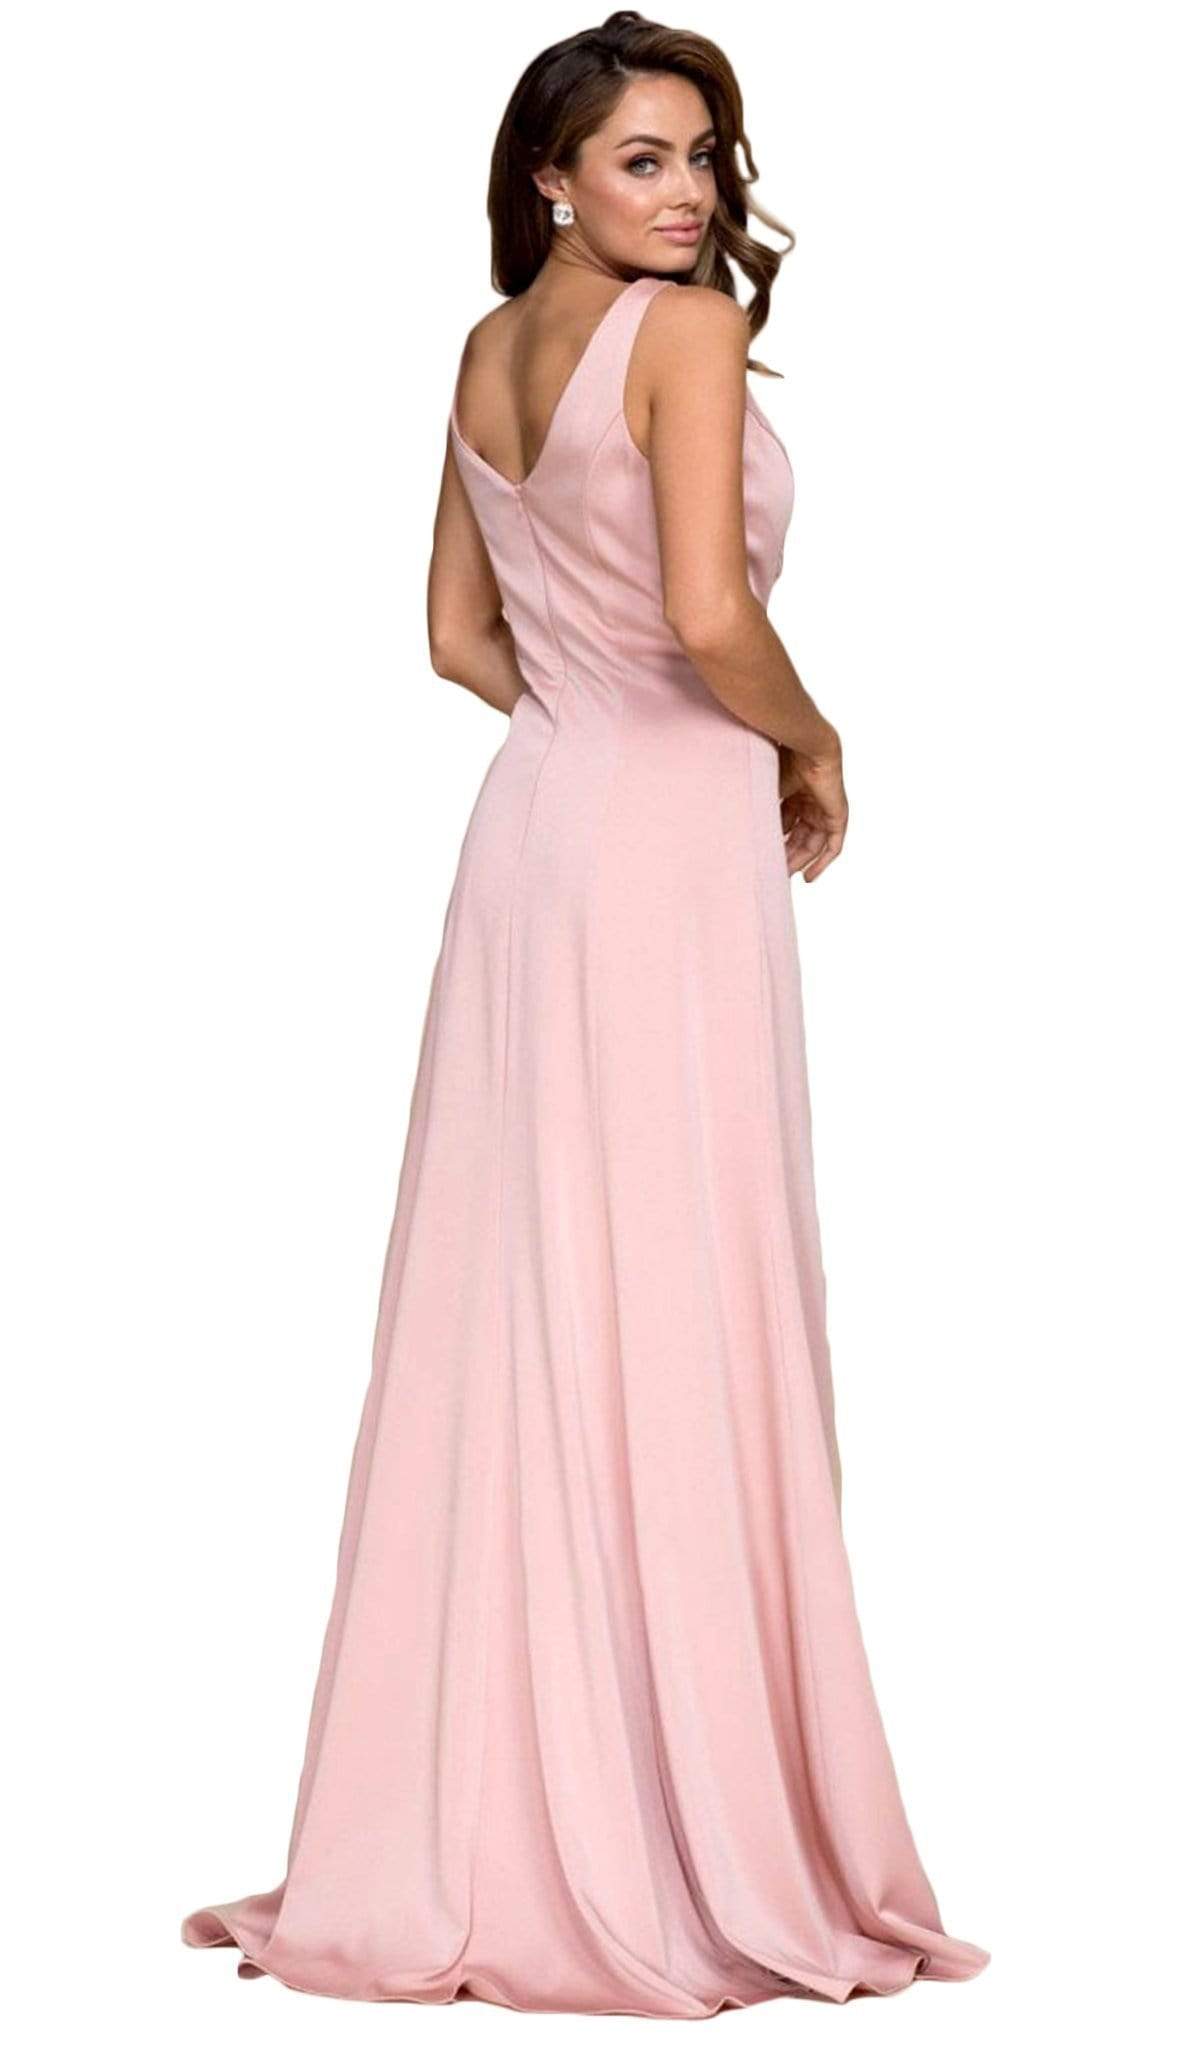 Nox Anabel - Q011 Sleeveless V-neck A-line Dress Special Occasion Dress